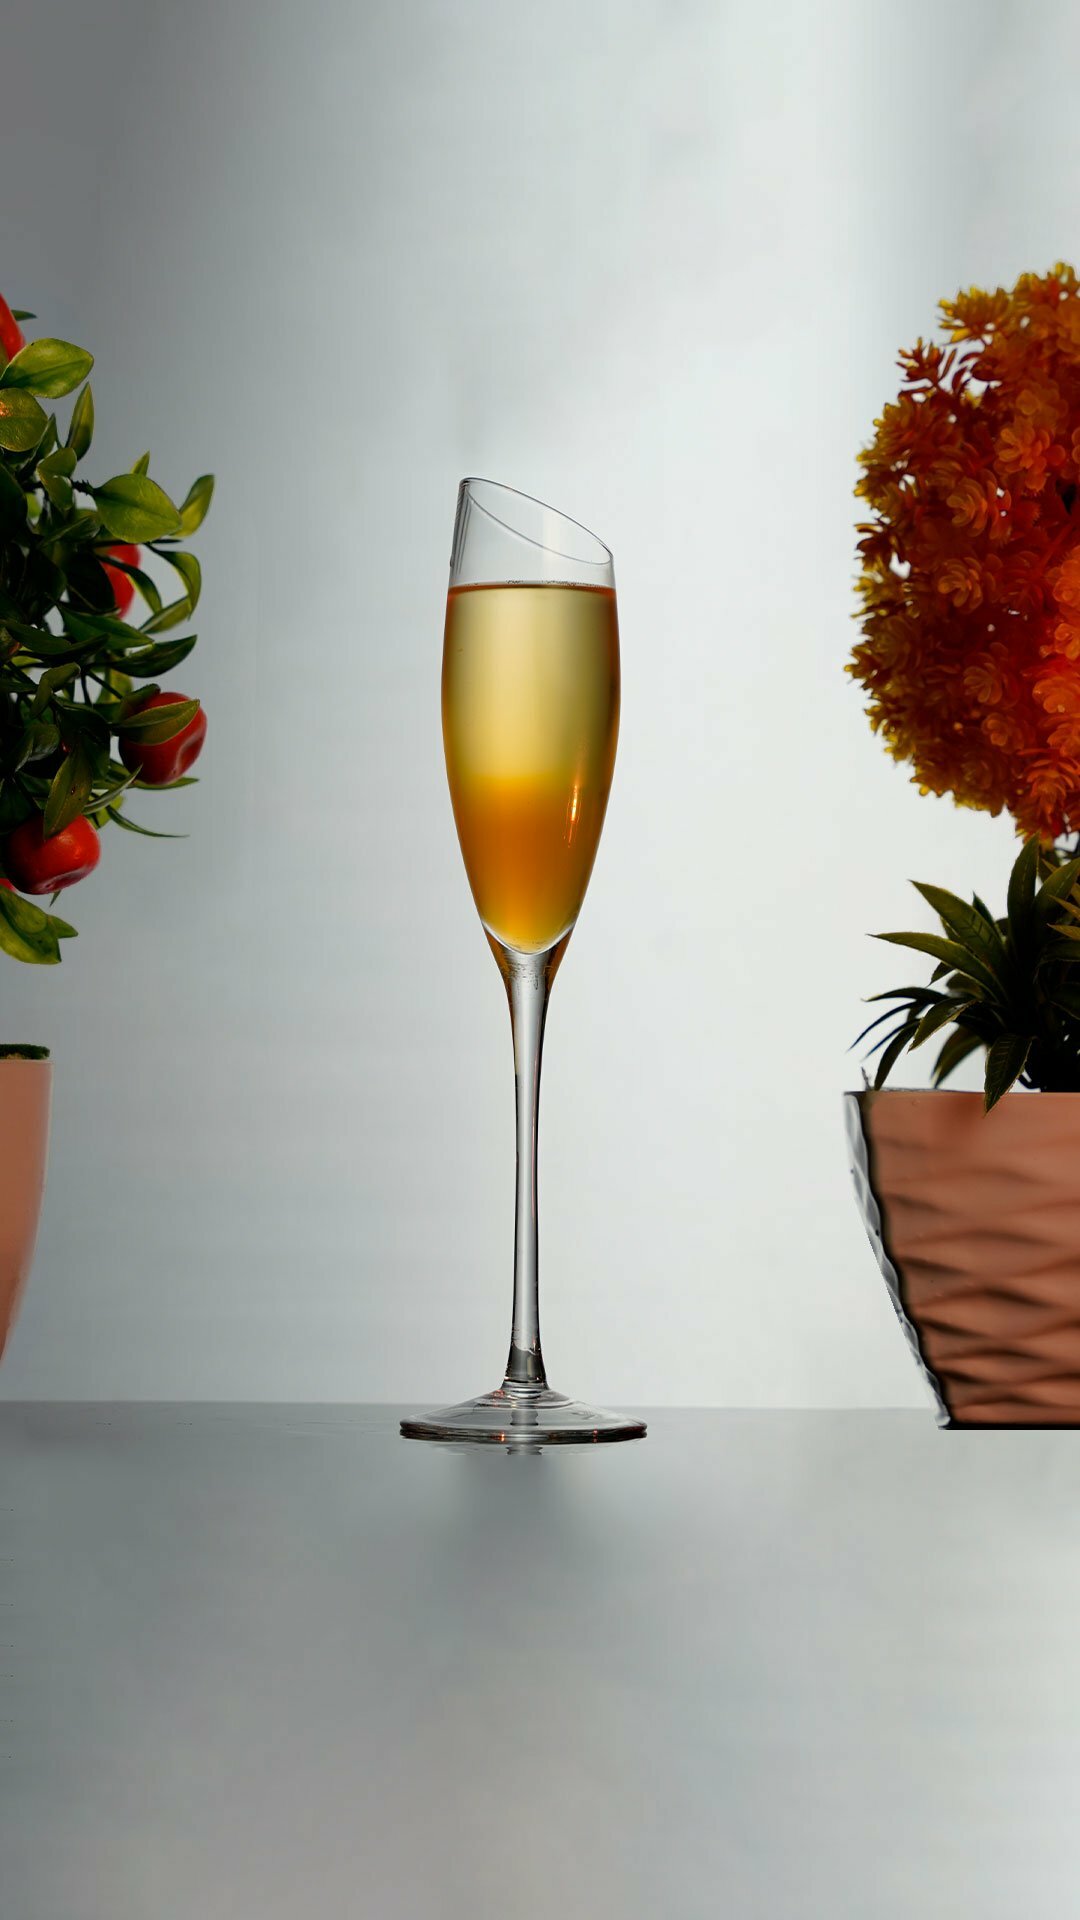 Orange Champagne Cocktail inside a flute champagne glass